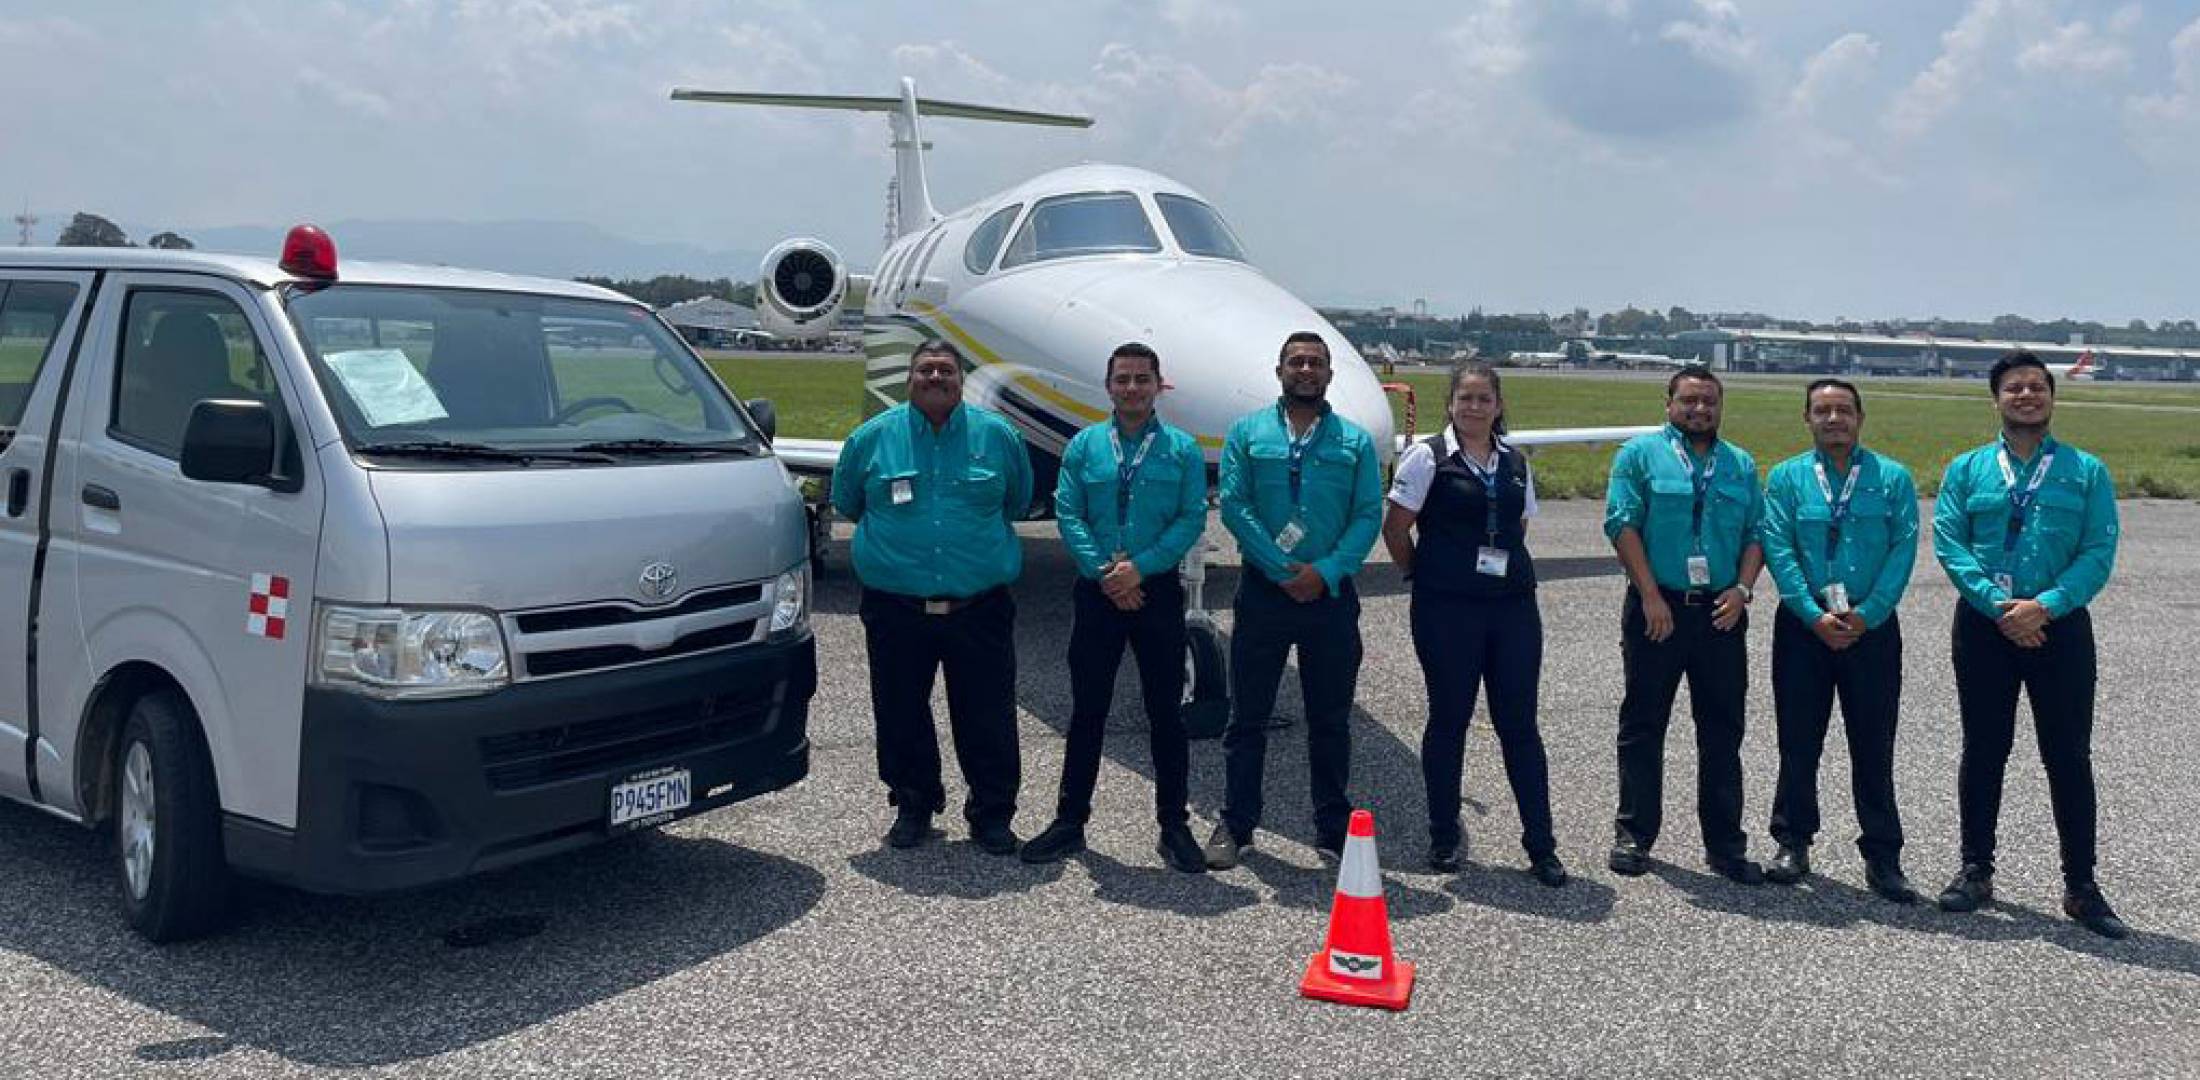 Air Station S.A. Staff at La Aurora Interational Airport in Guatemala